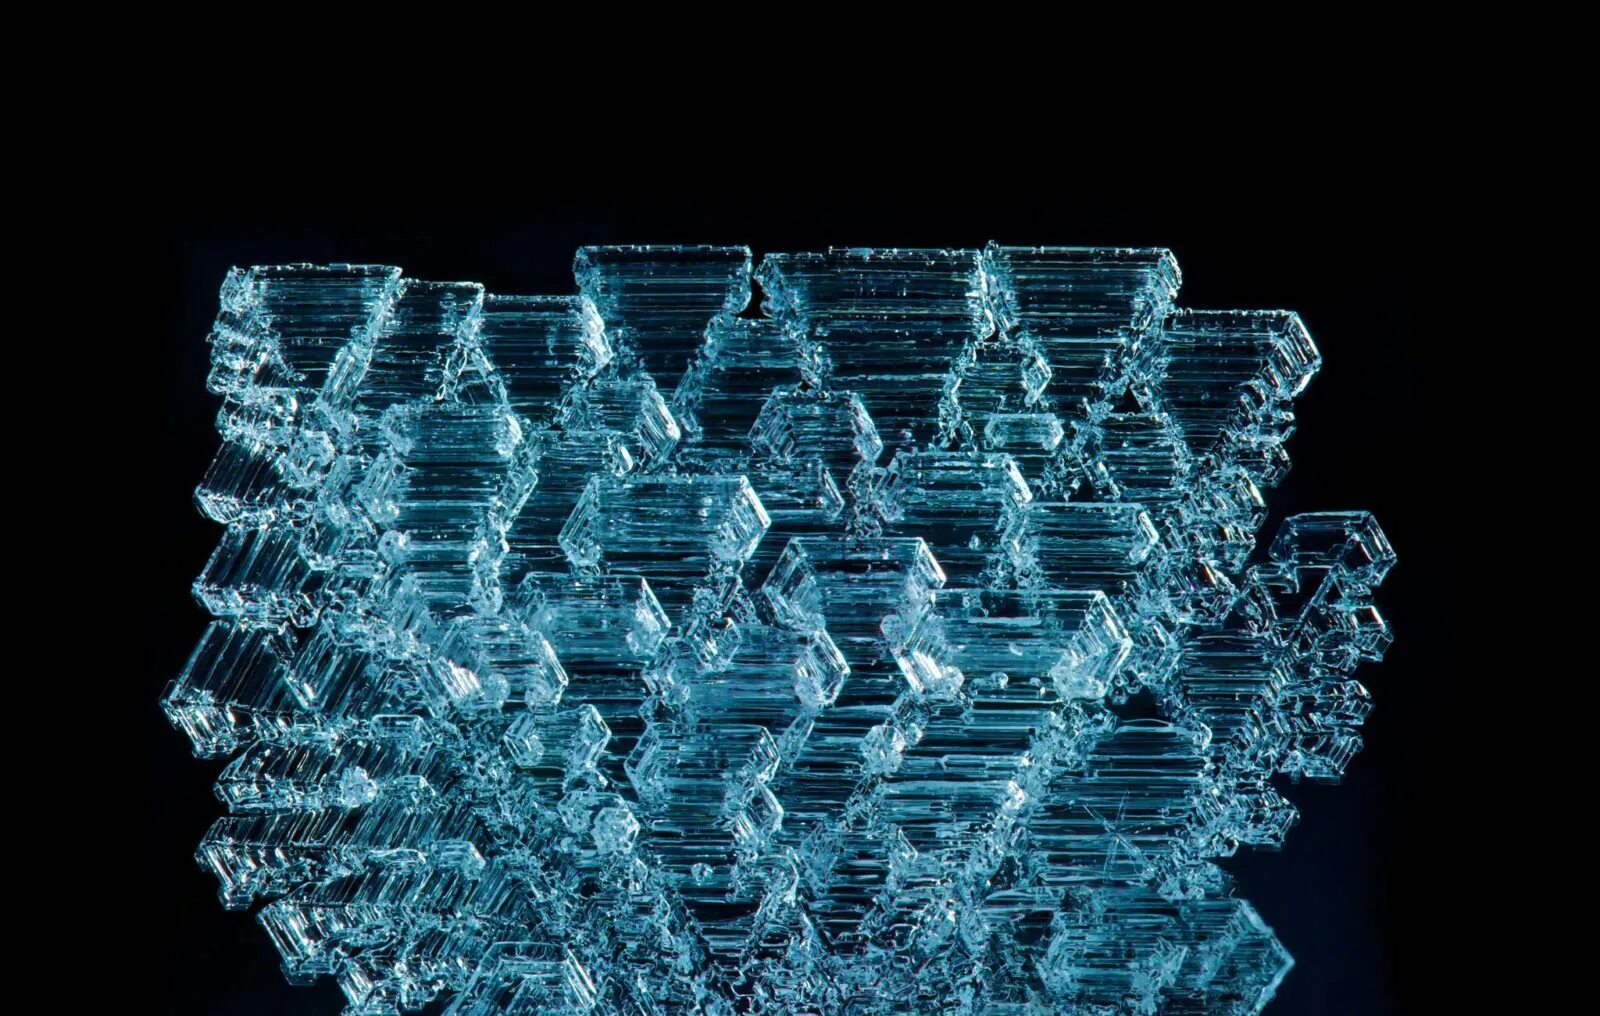 Кристаллы под микроскопом. Лед под микроскопом. Кристаллы льда под микроскопом. Кристаллики льда под микроскопом. Современные кристаллические материалы